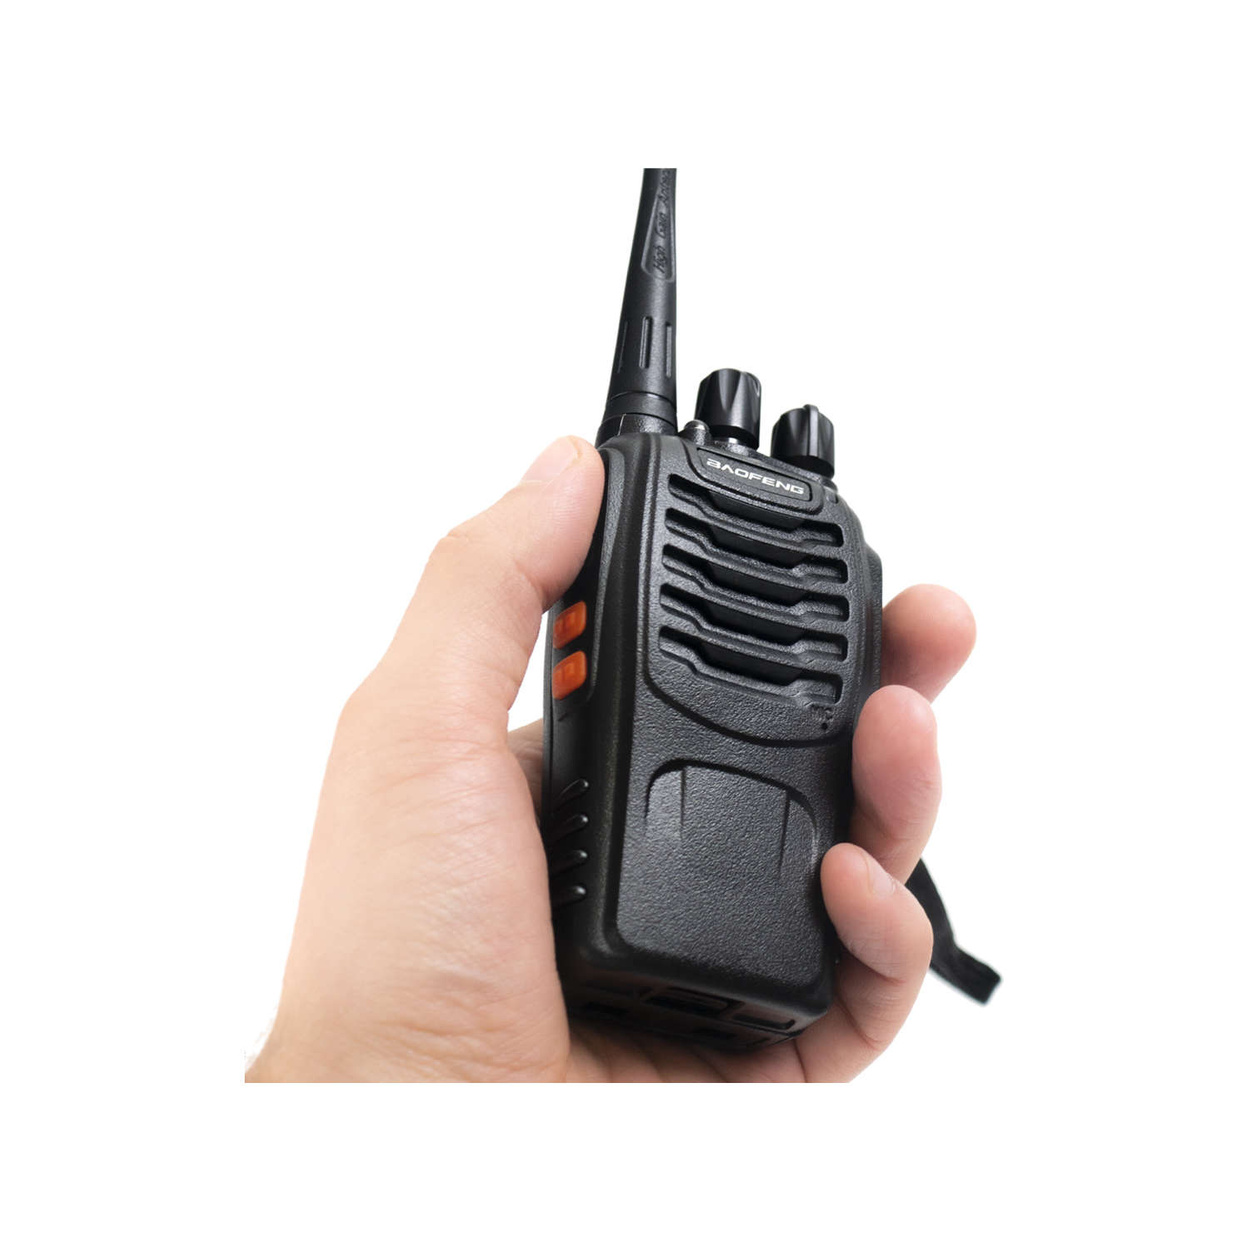 4x Radiotelefon BAOFENG BF-888S Krótkofalówka UHF PMR